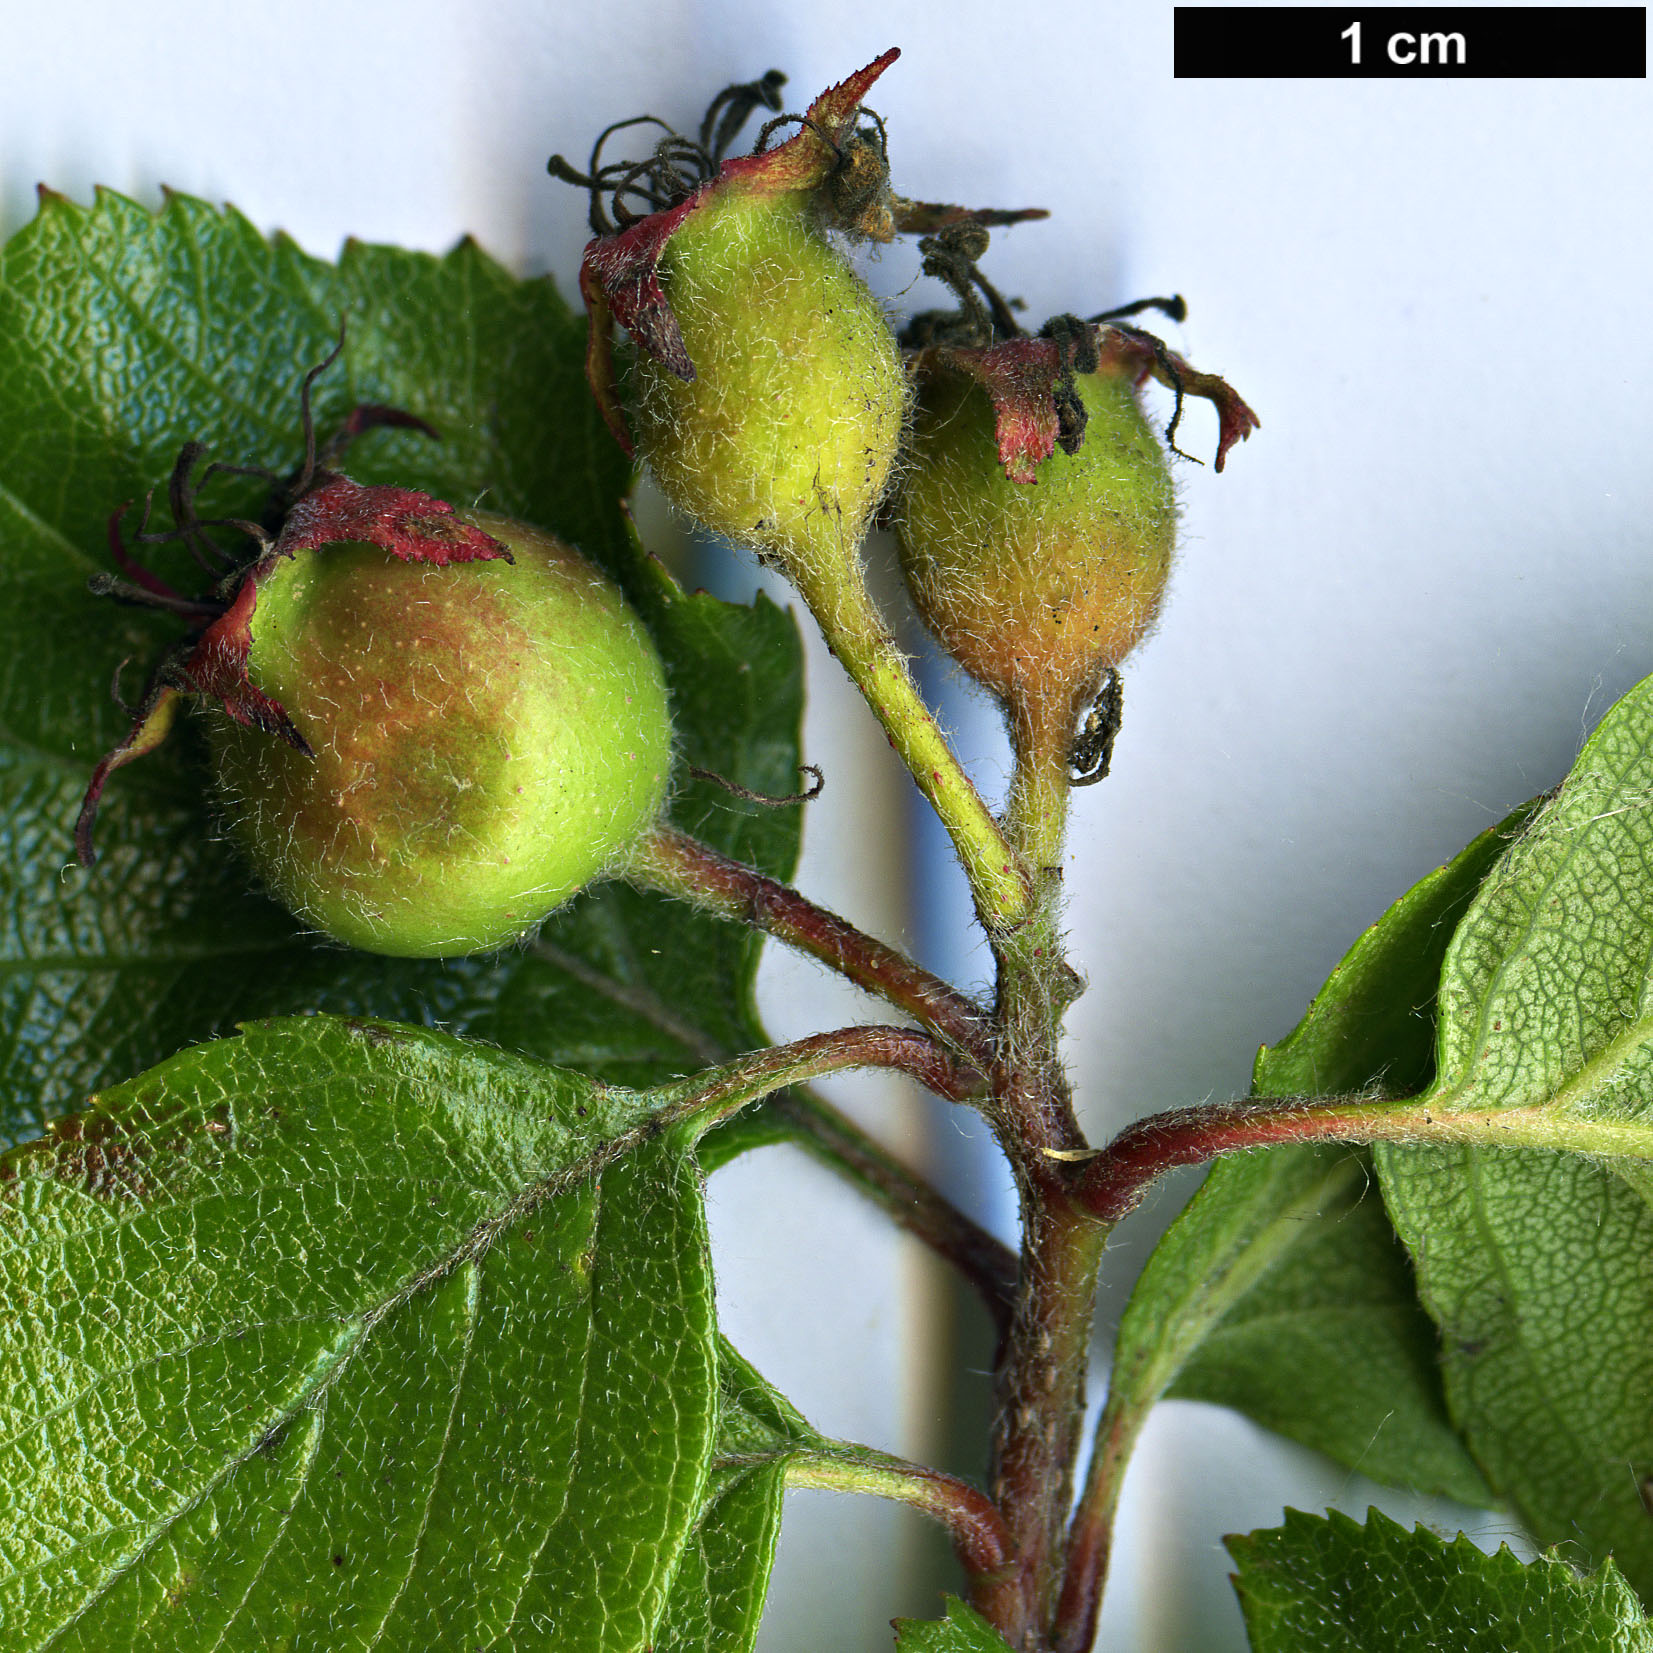 High resolution image: Family: Rosaceae - Genus: Crataegus - Taxon: greggiana - SpeciesSub: var. pepo